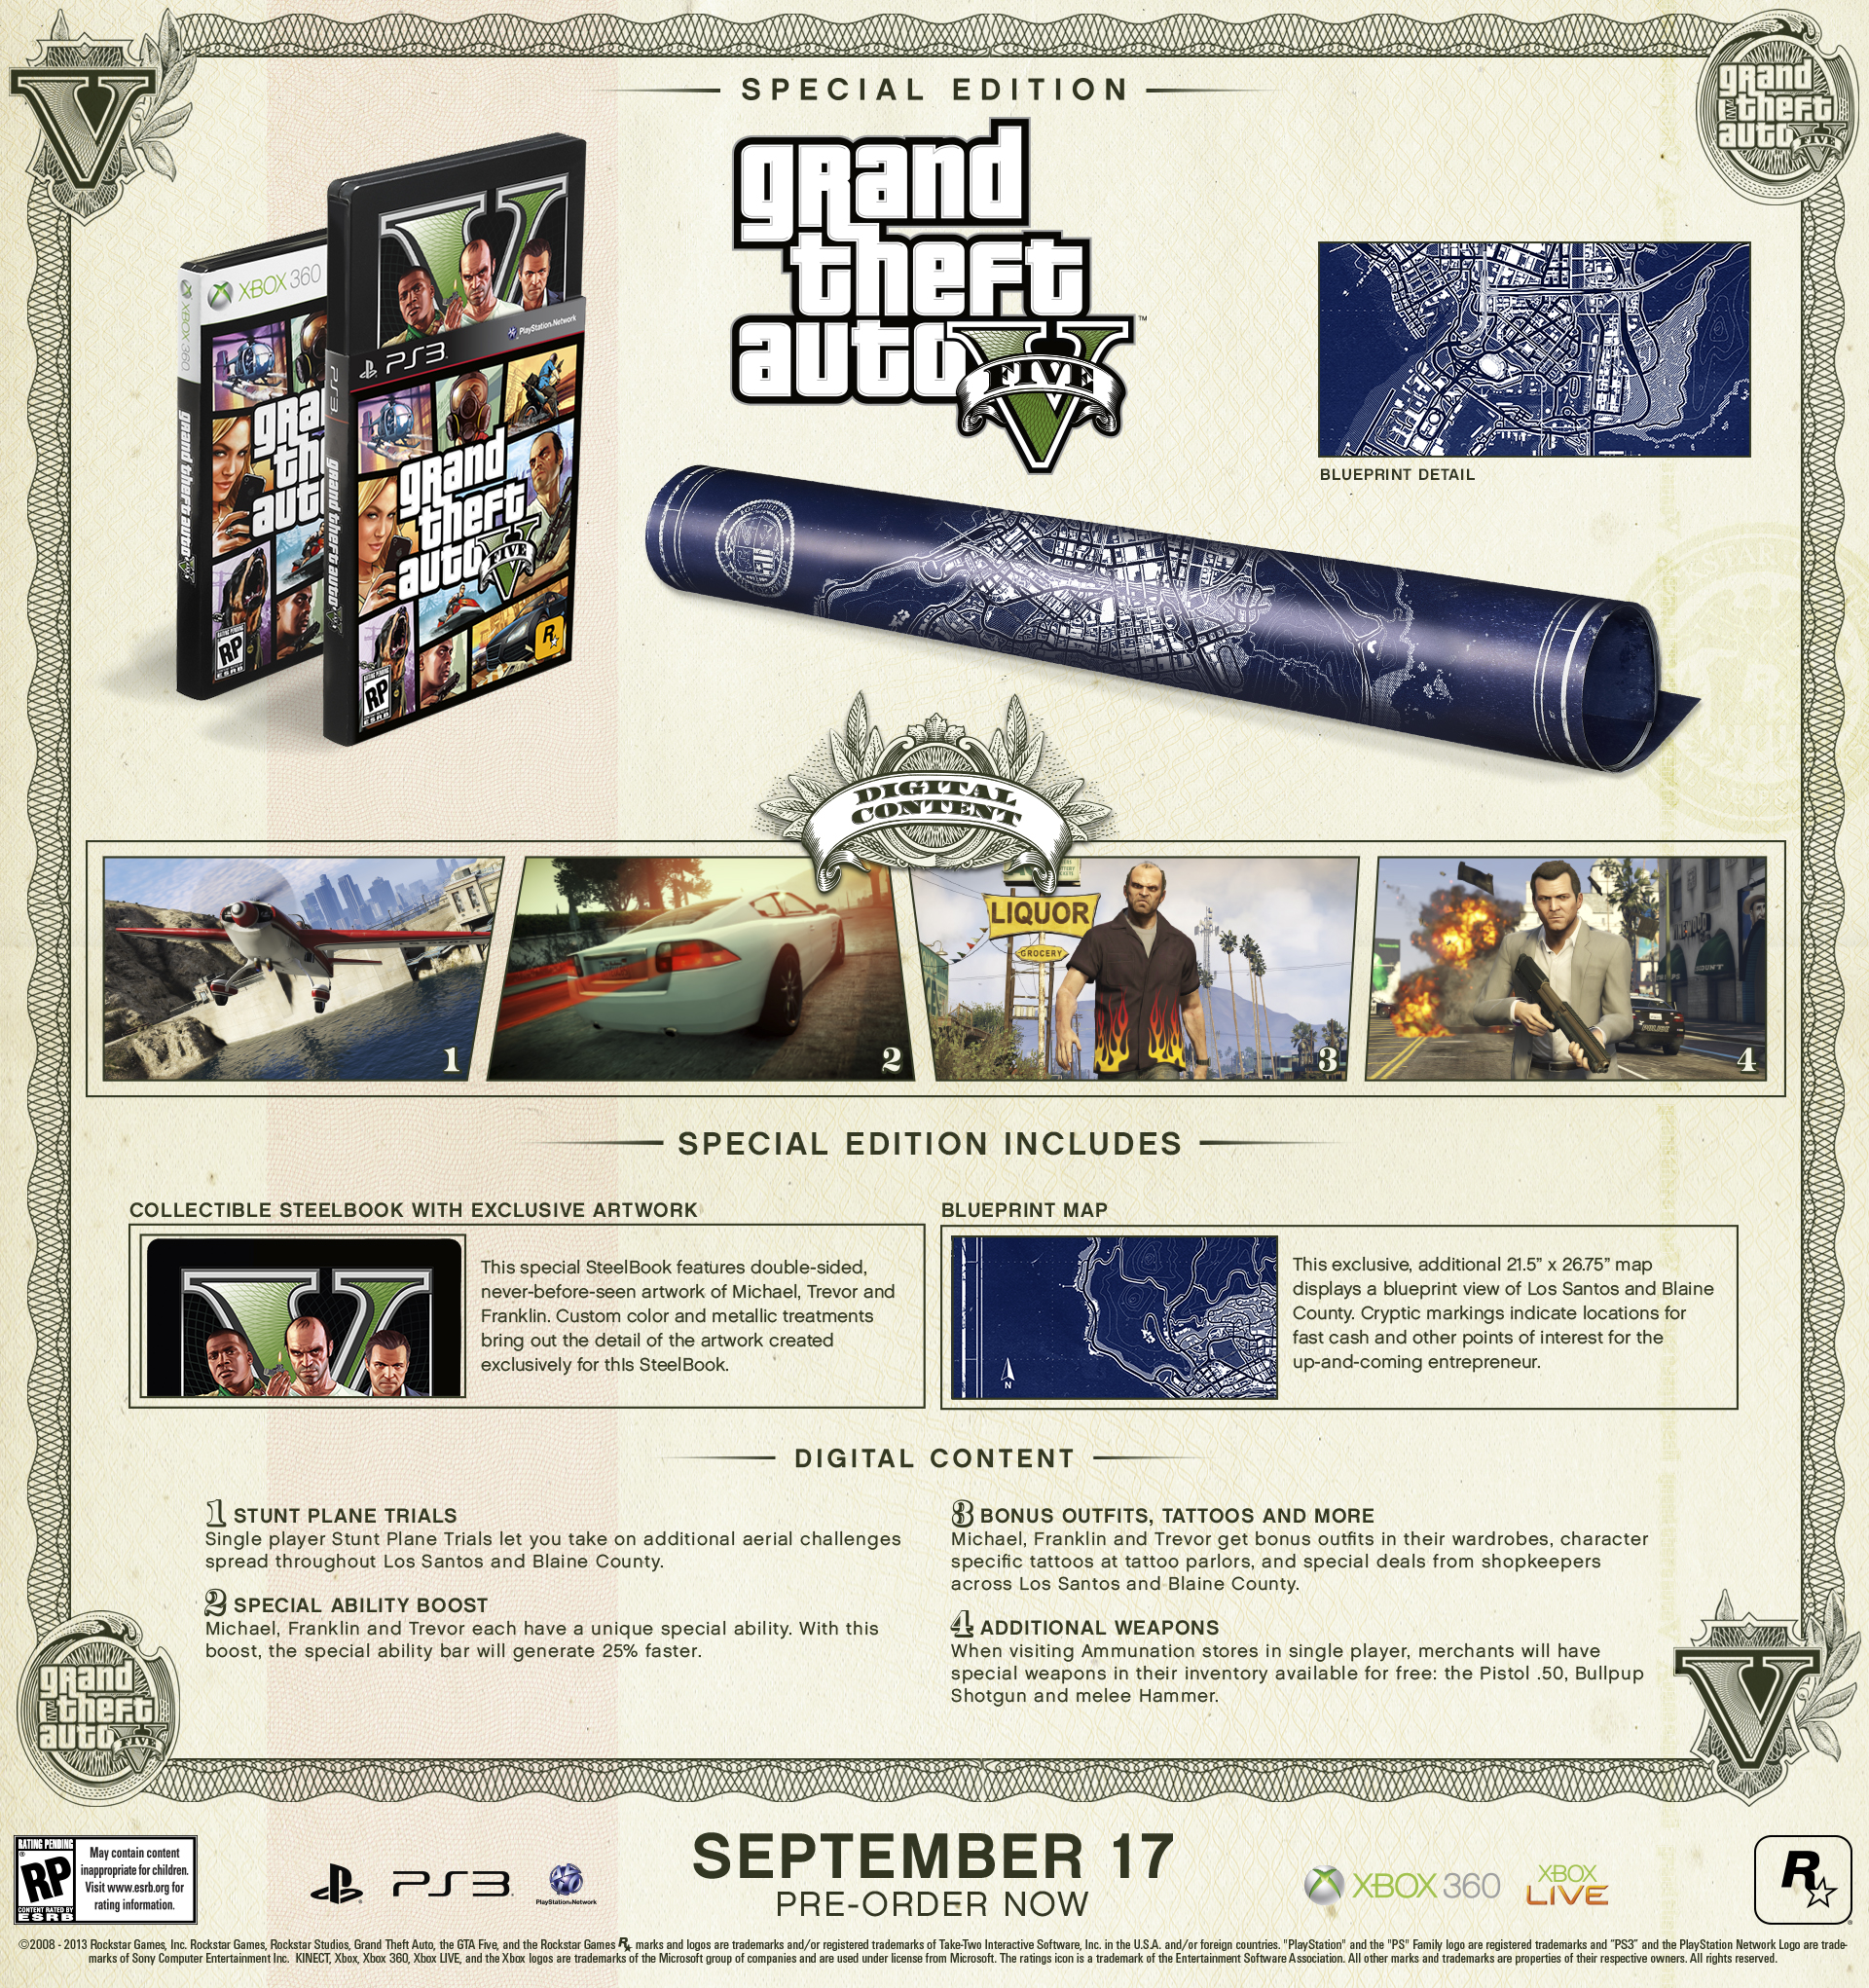 Xbox 360 - (GTA 5) Grand Theft Auto V 2 Disc Set w/ Manual -Tested -No Map